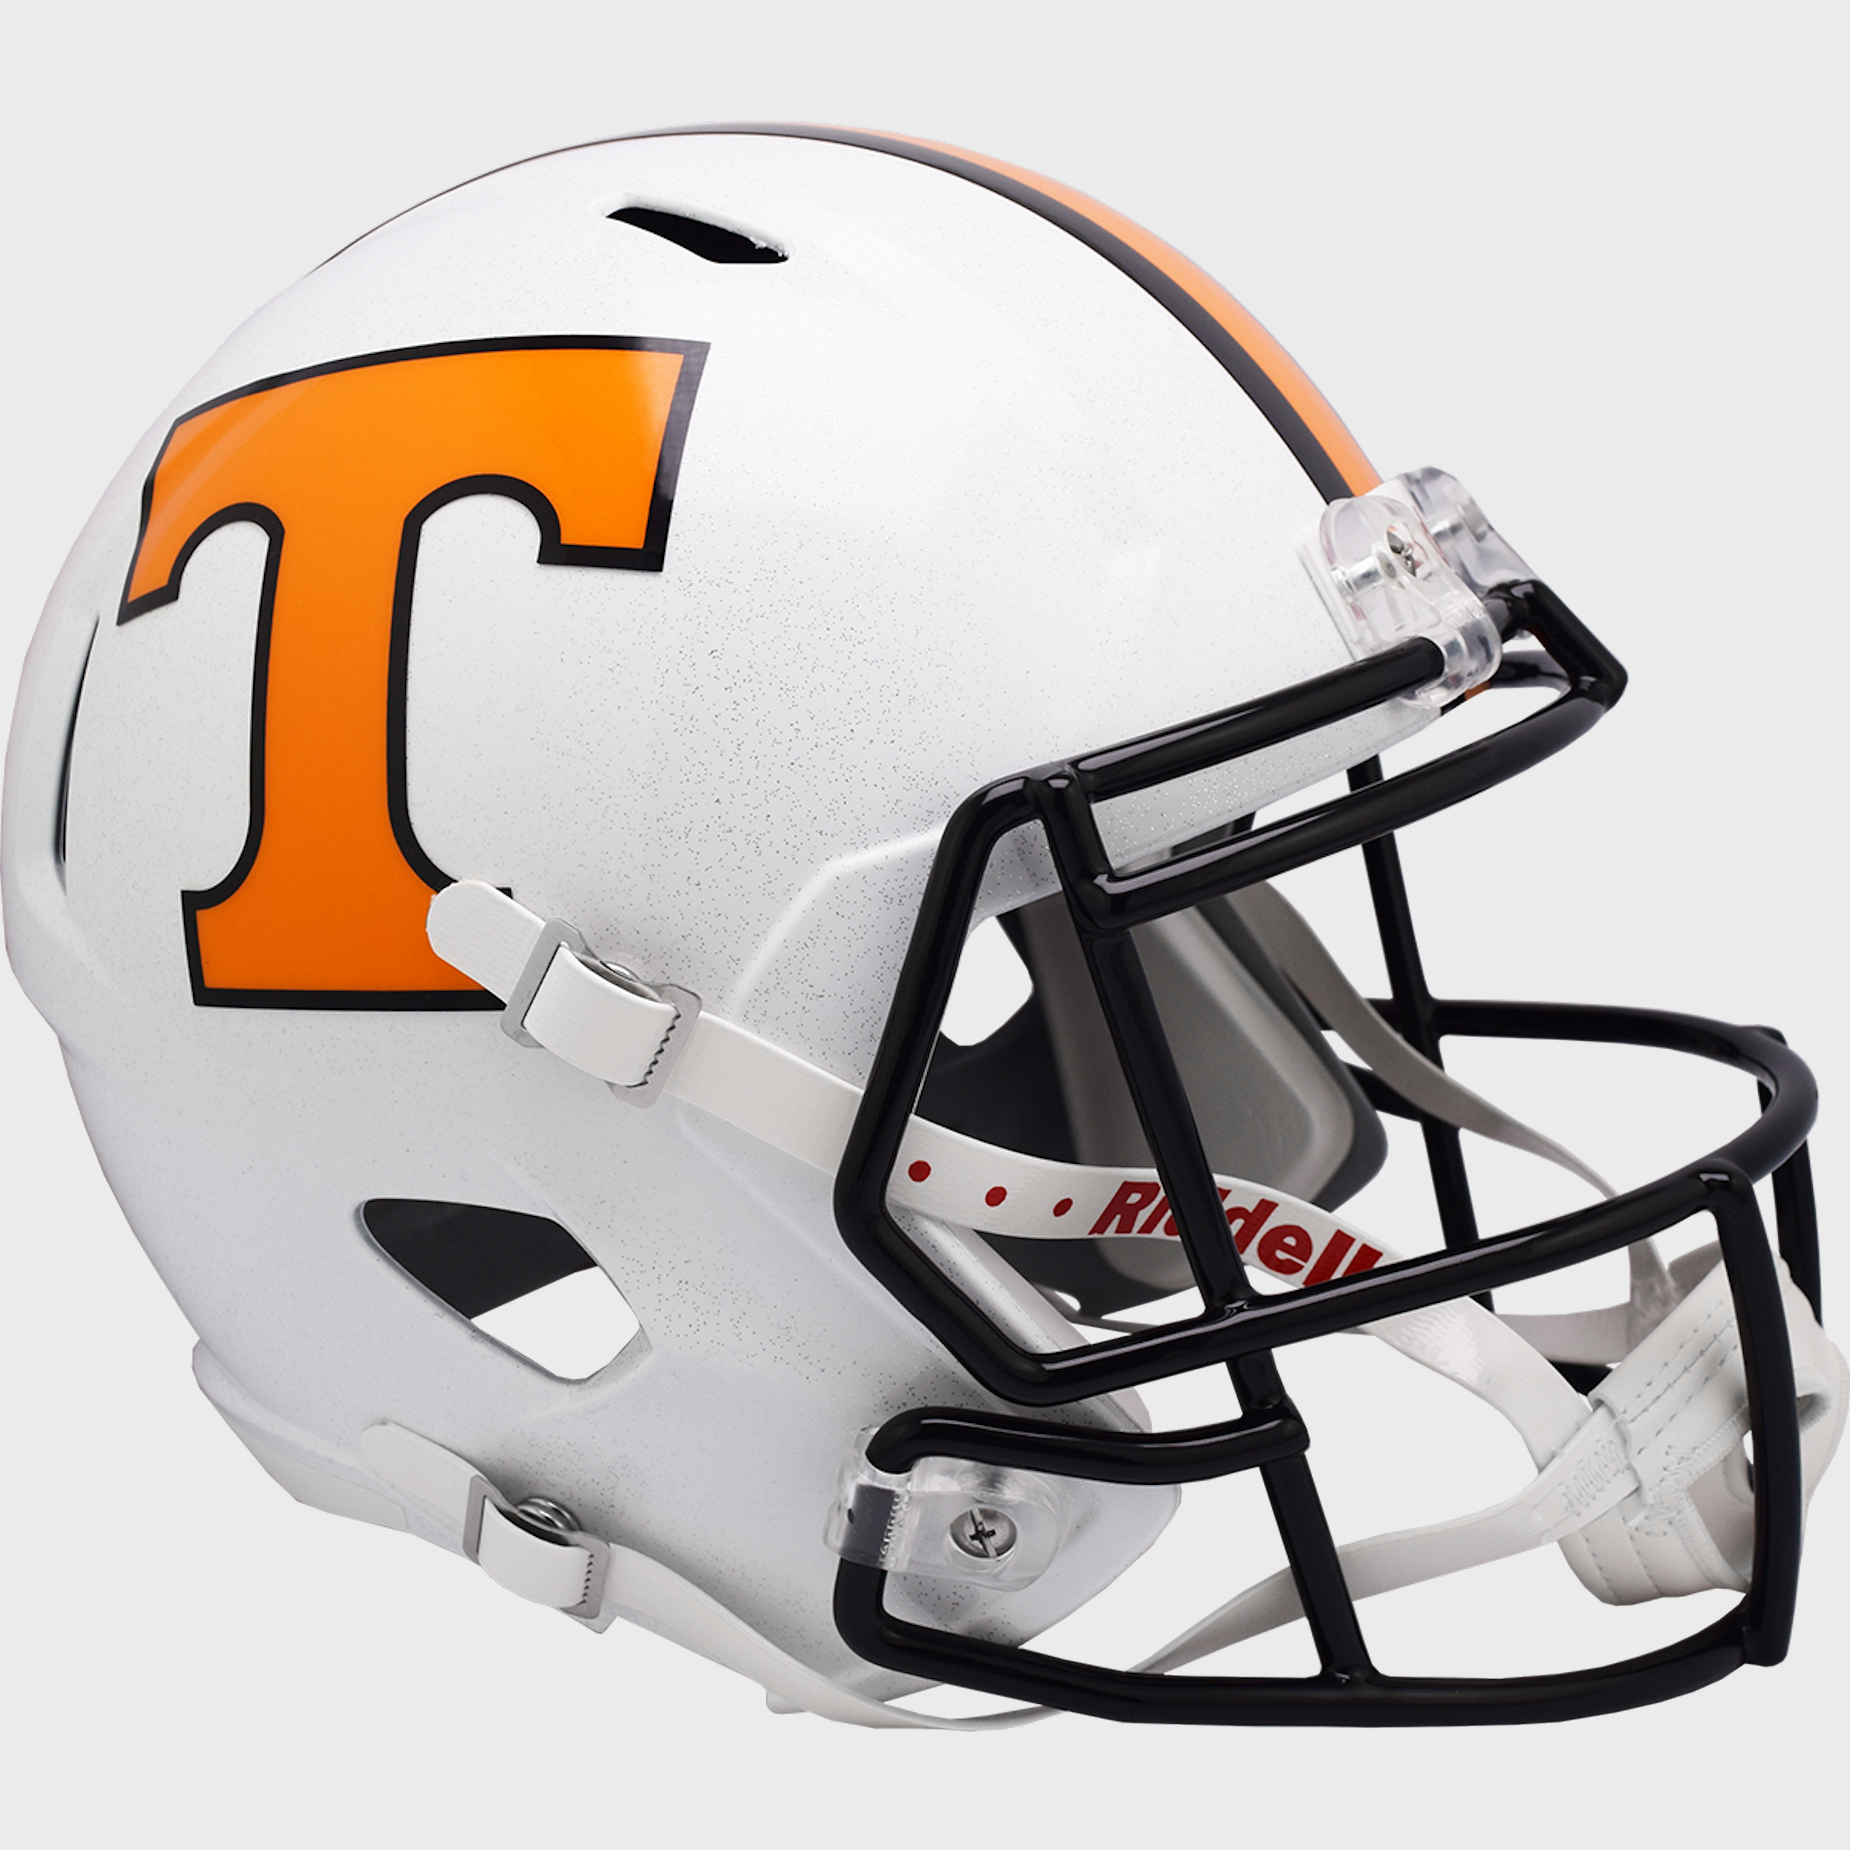 Tennessee Volunteers full size replica helmet